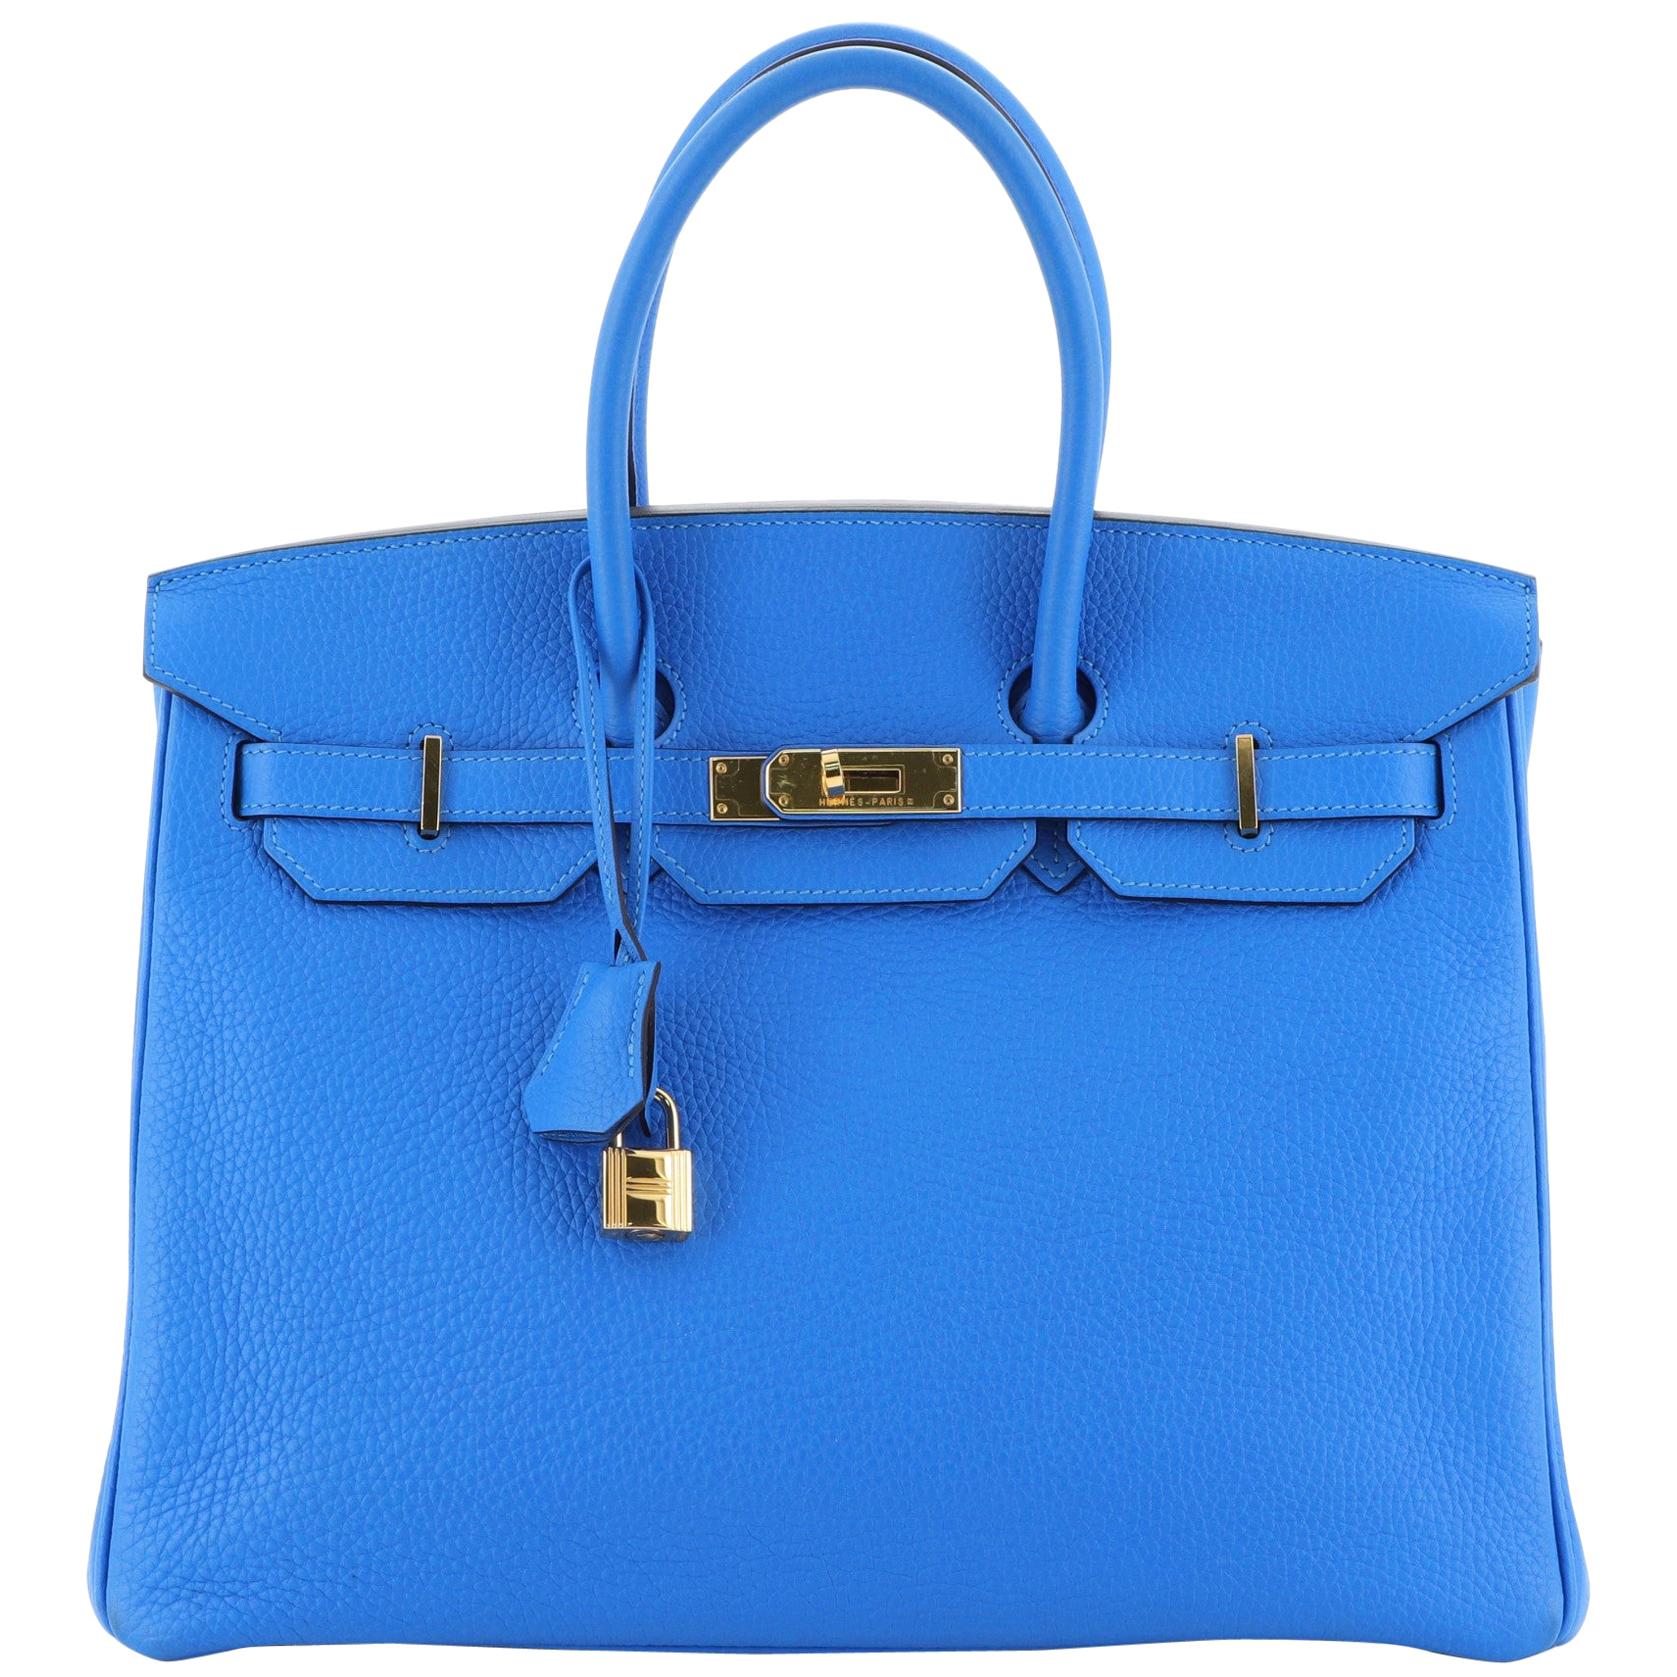 Hermes Birkin Handbag Blue Clemence With Gold Hardware 35 